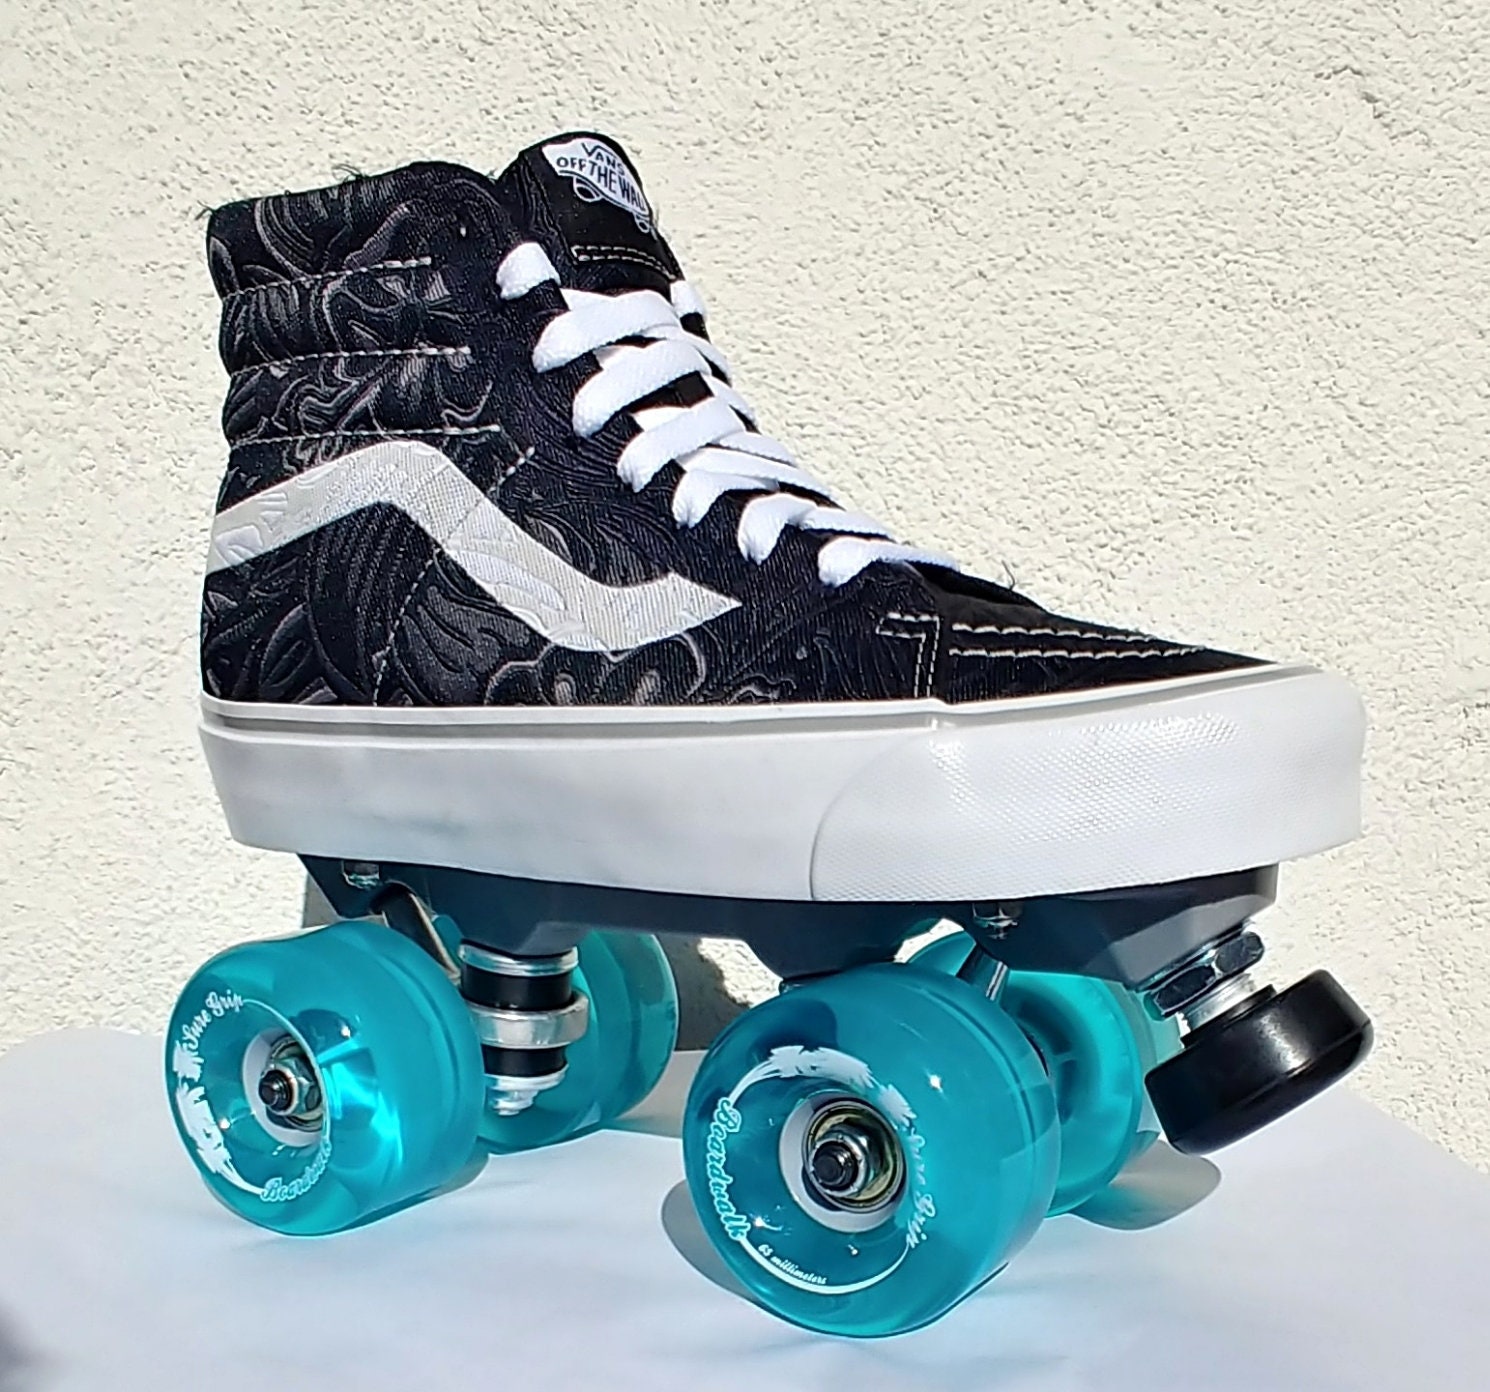 Custom Vans Roller Skates With Nylon Plates - Etsy